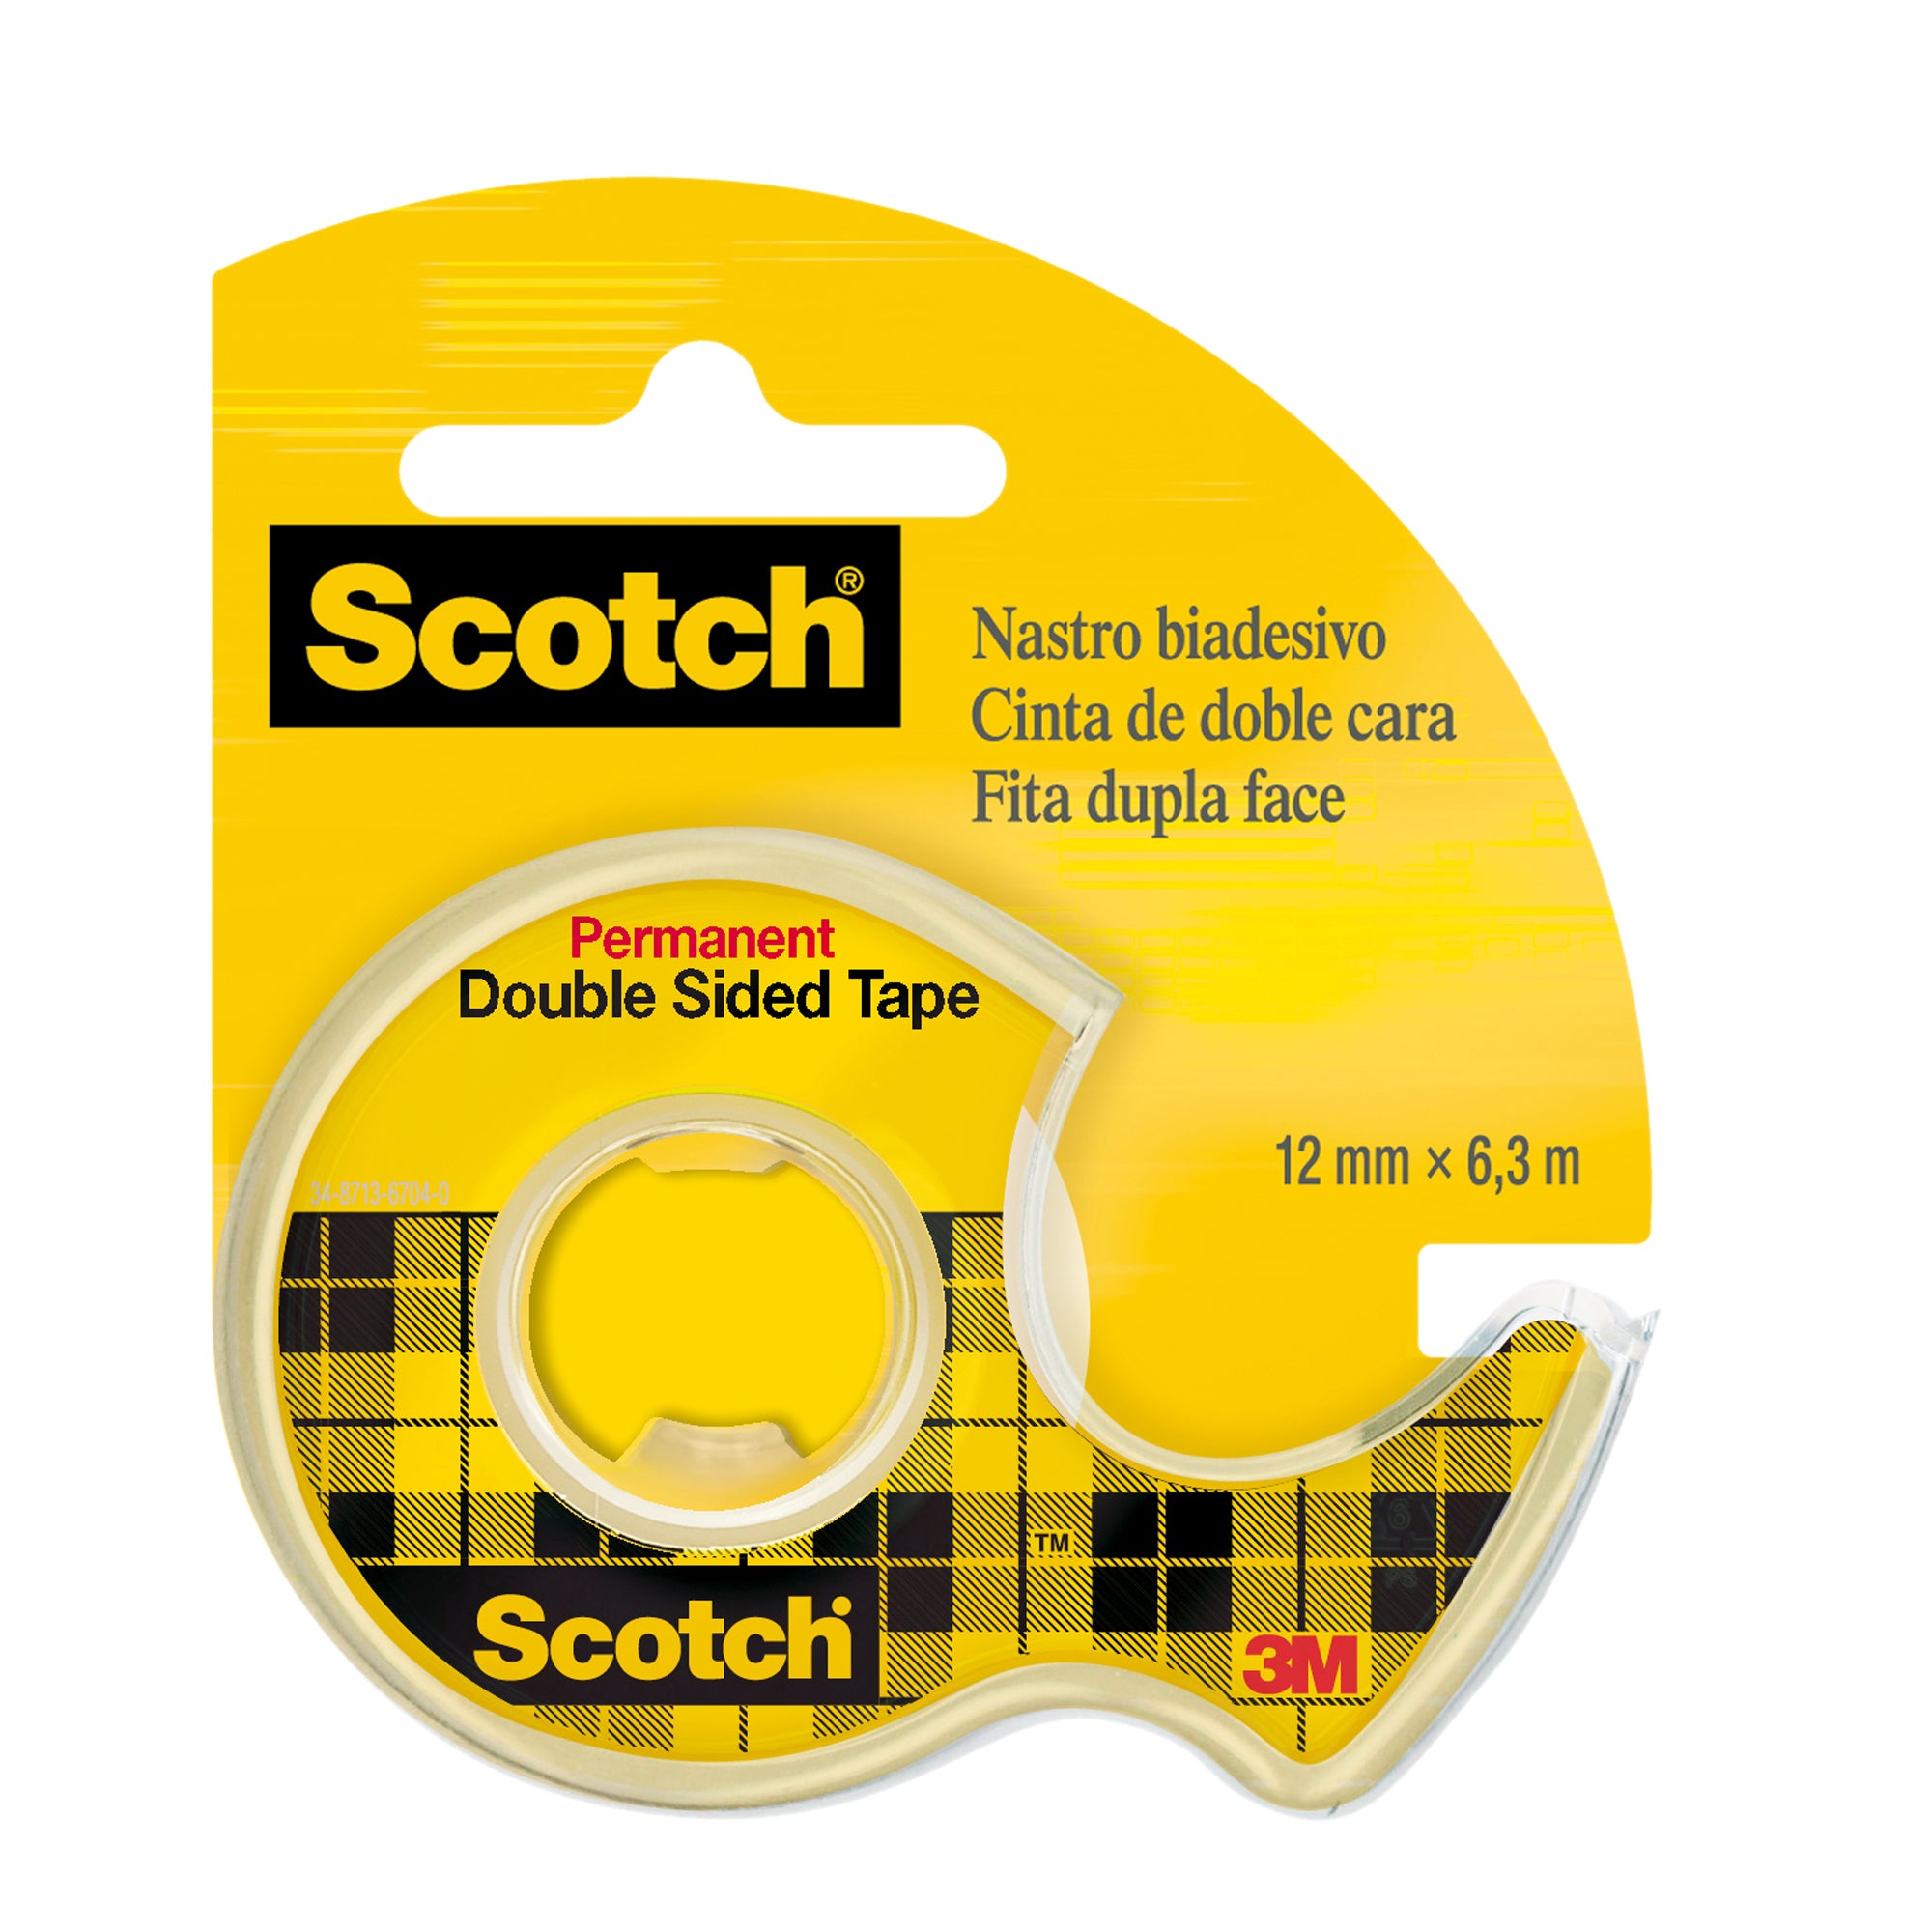 scotch-nastro-biadesivo-6-3mtx12mm-665-136d-permanente-s-liner-chiocciola